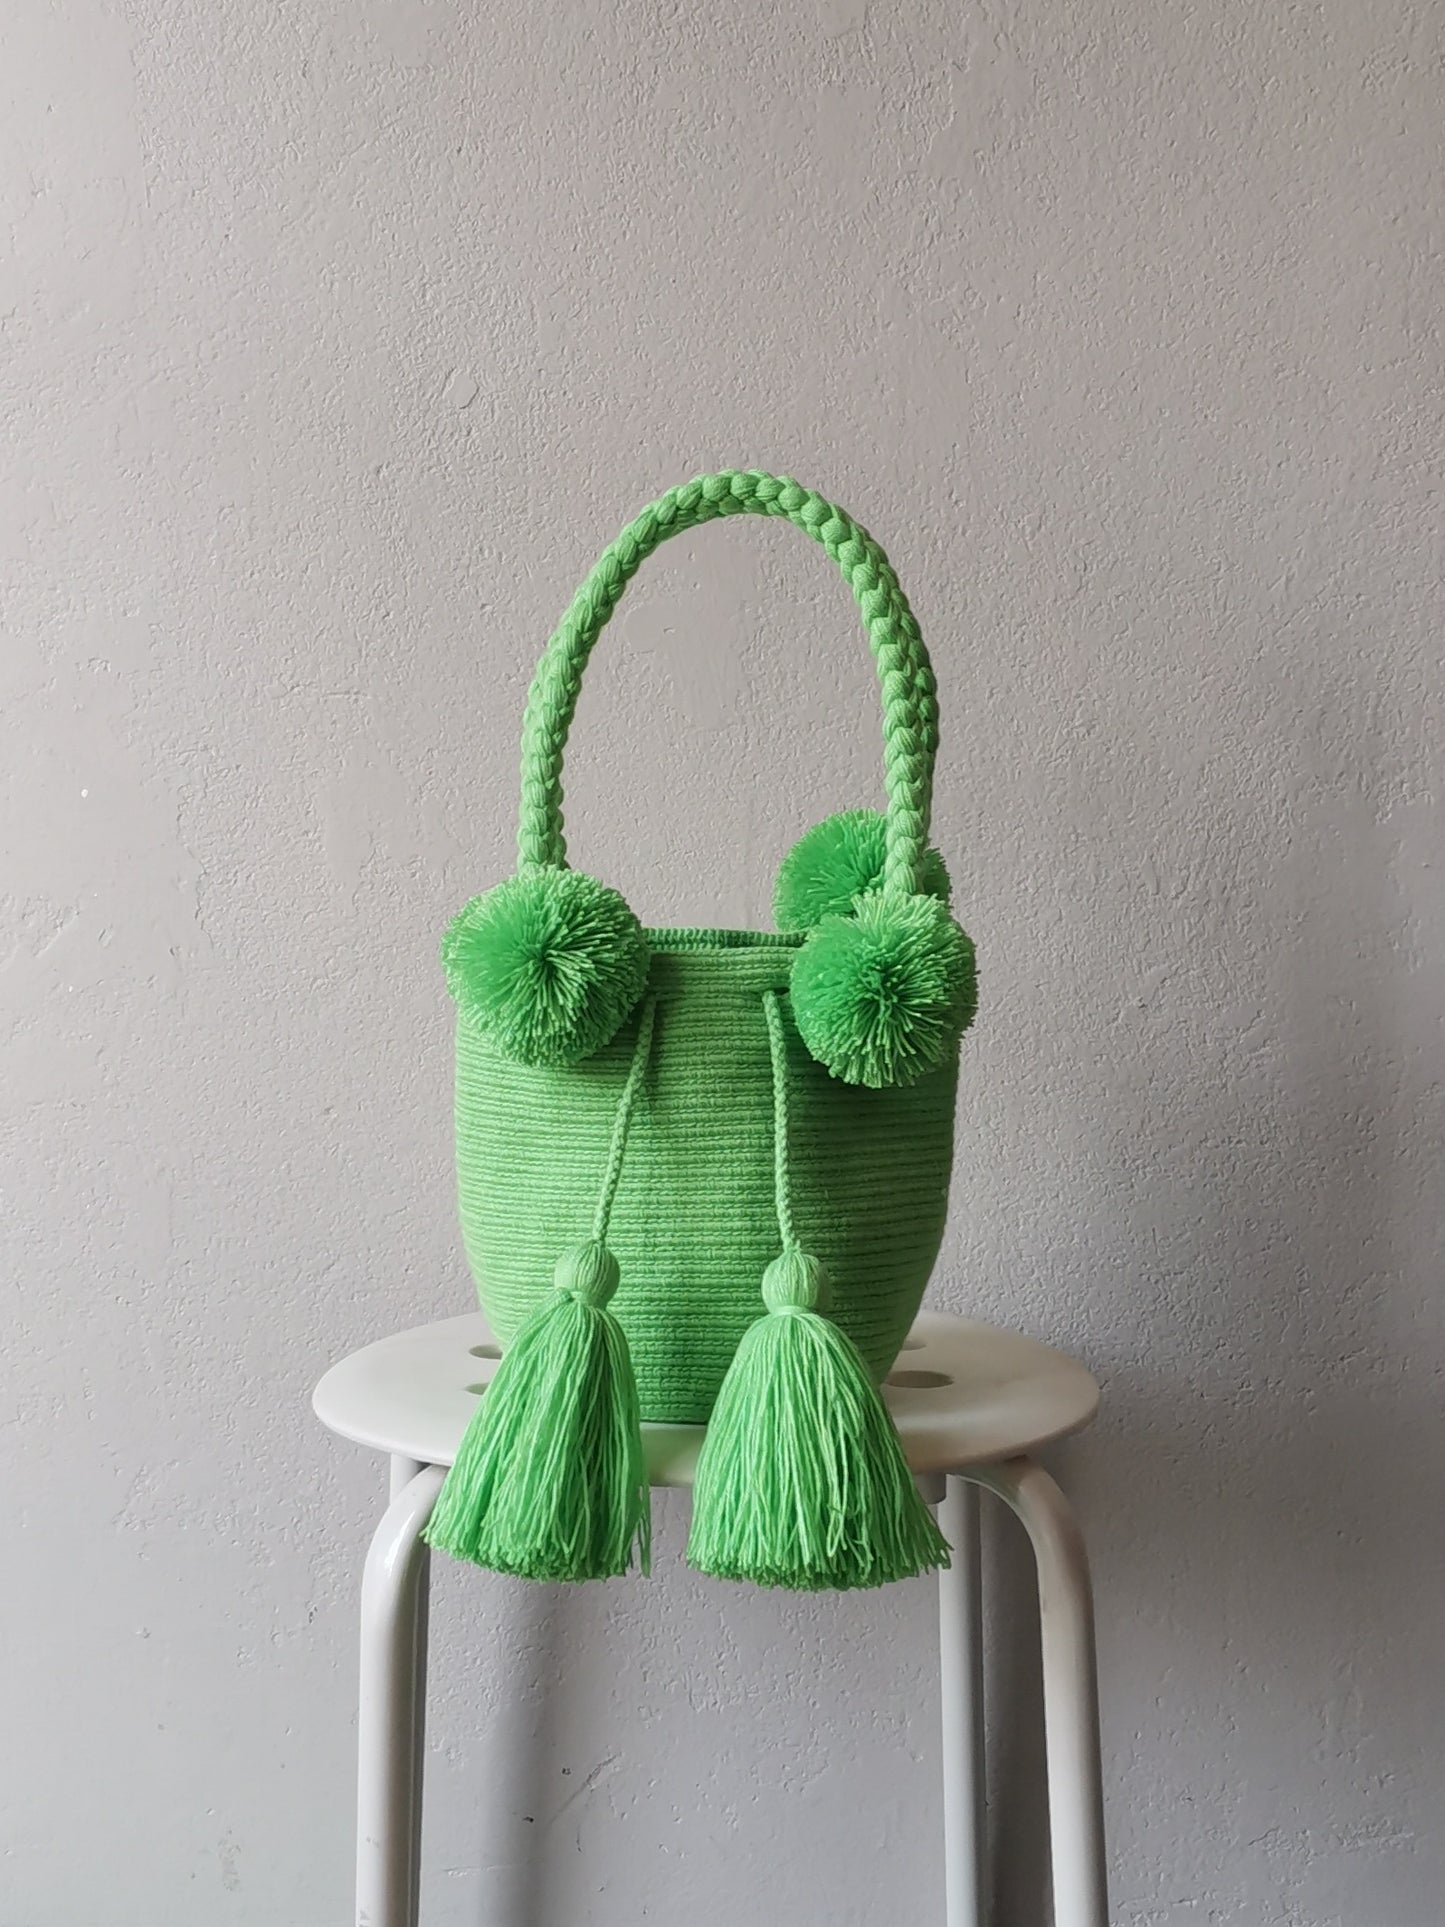 Mochila handbag S in single color grasshopper green